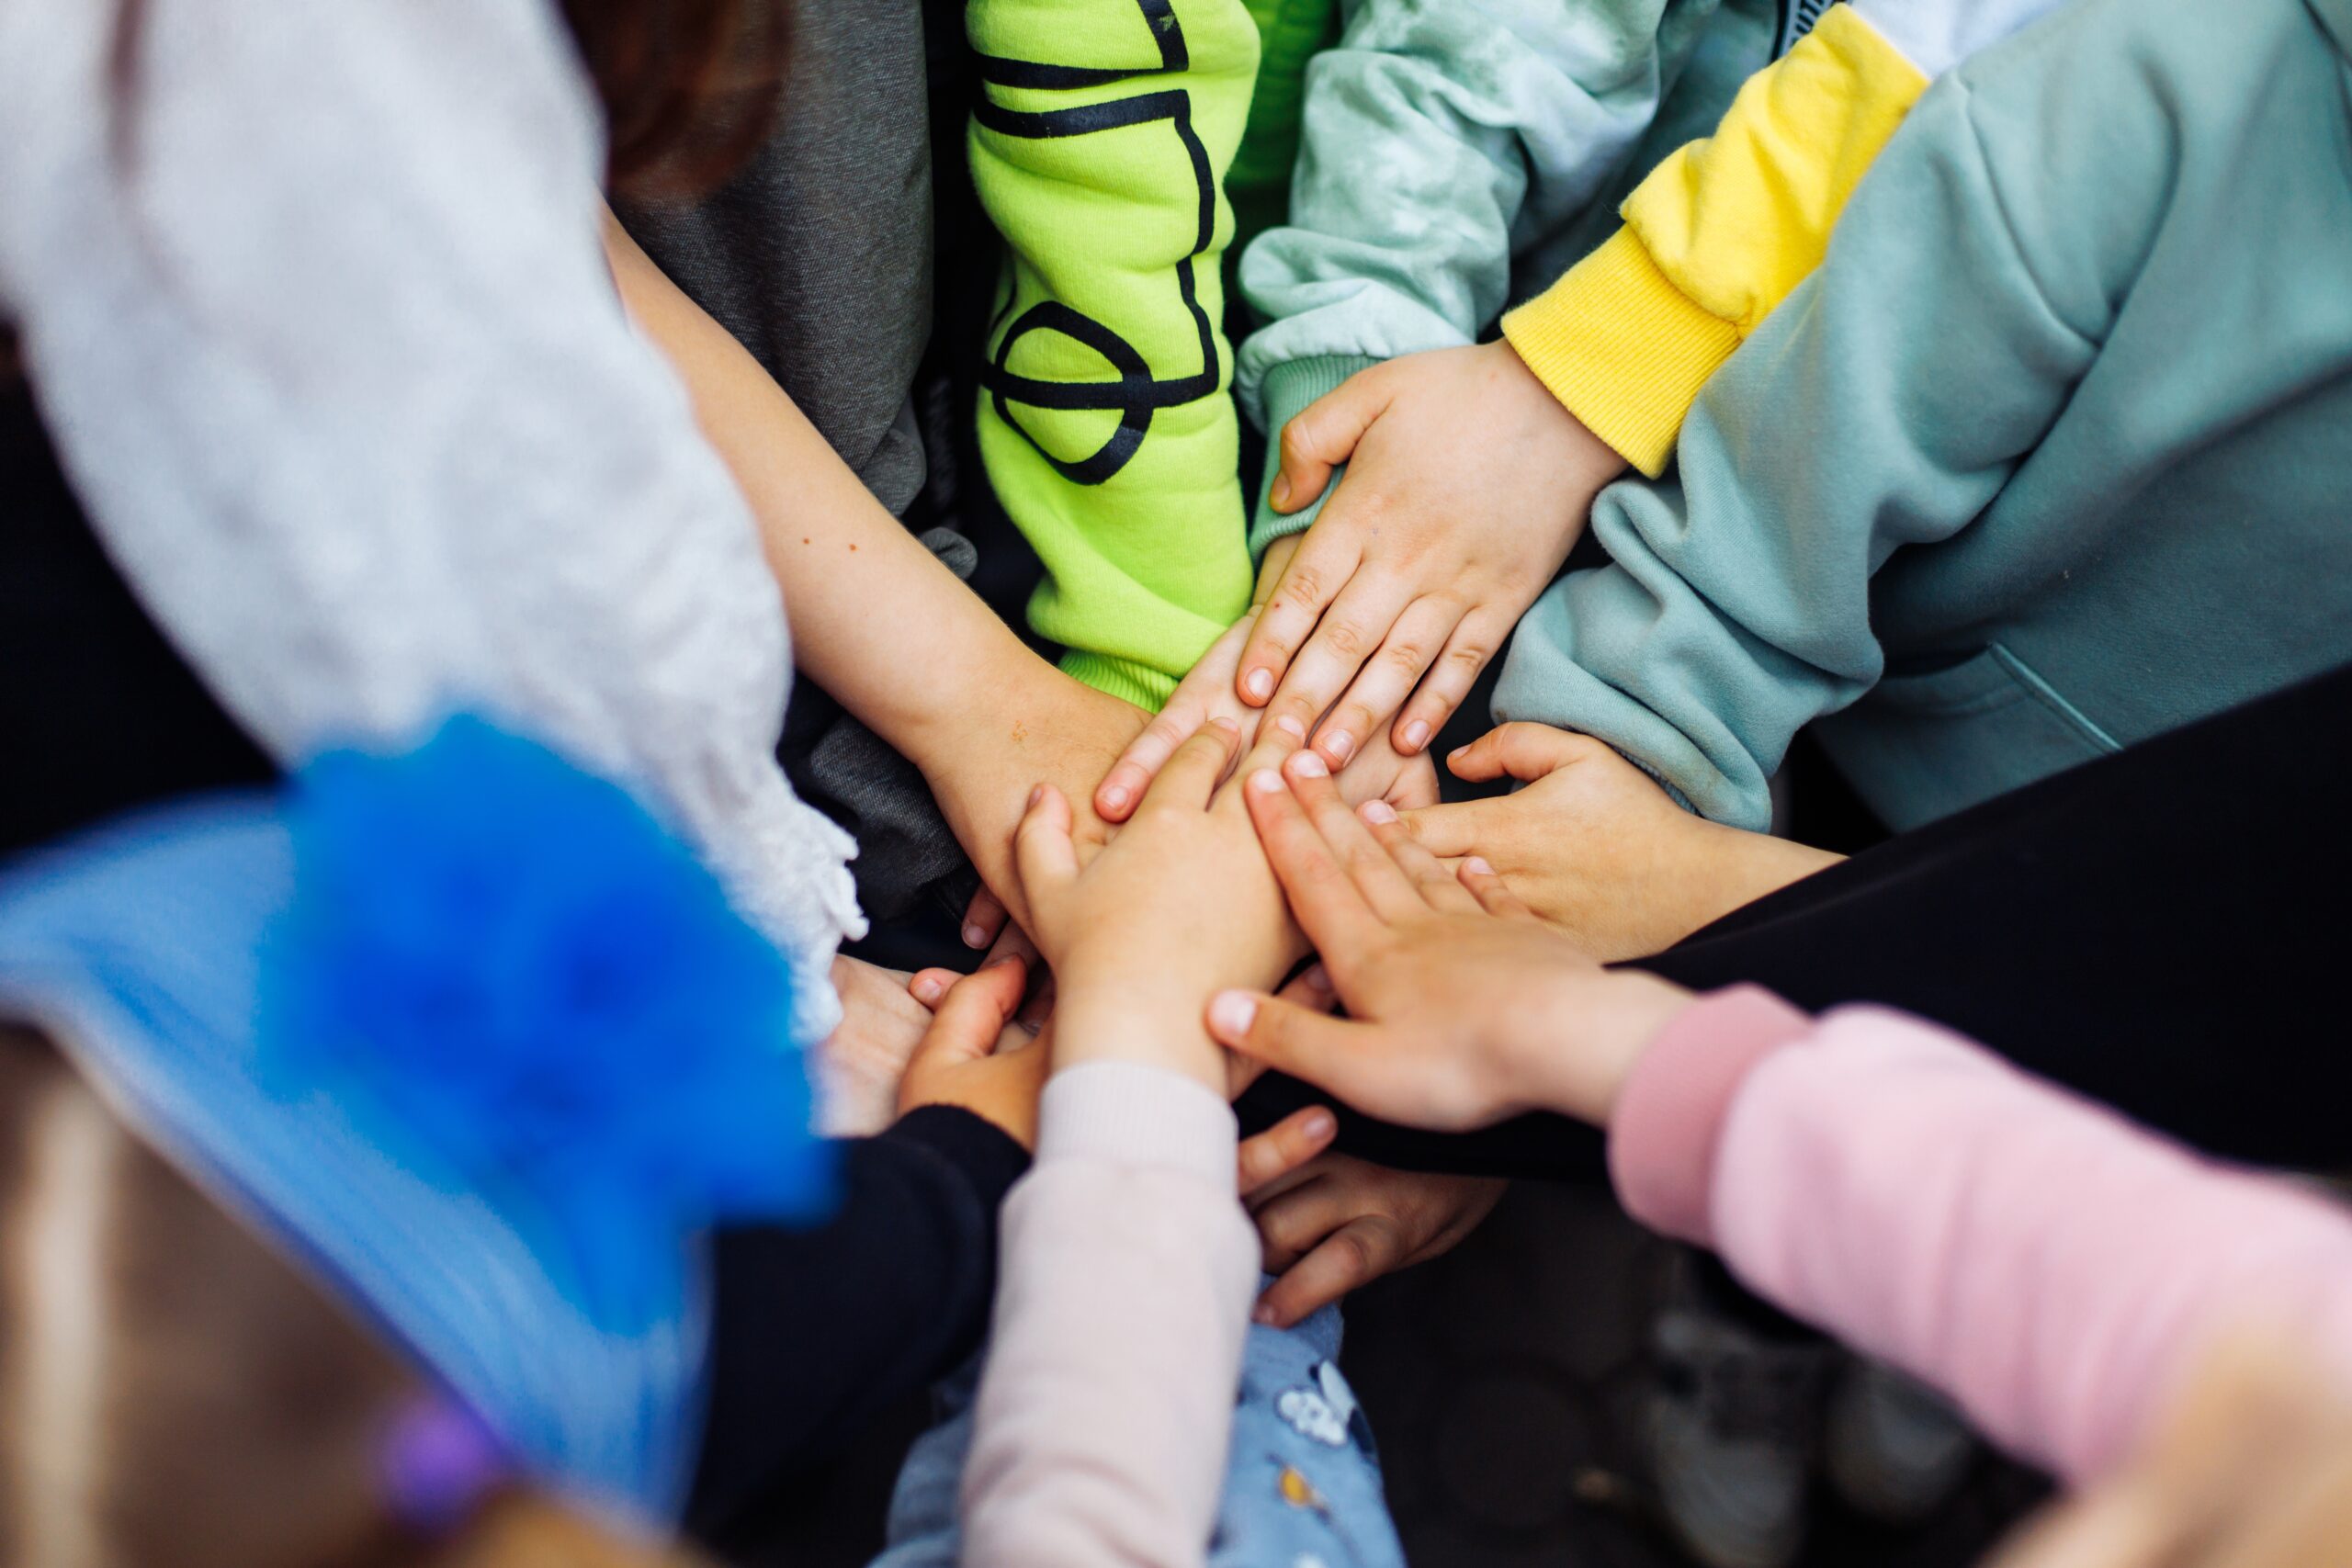 Children's hands, team building and friendship